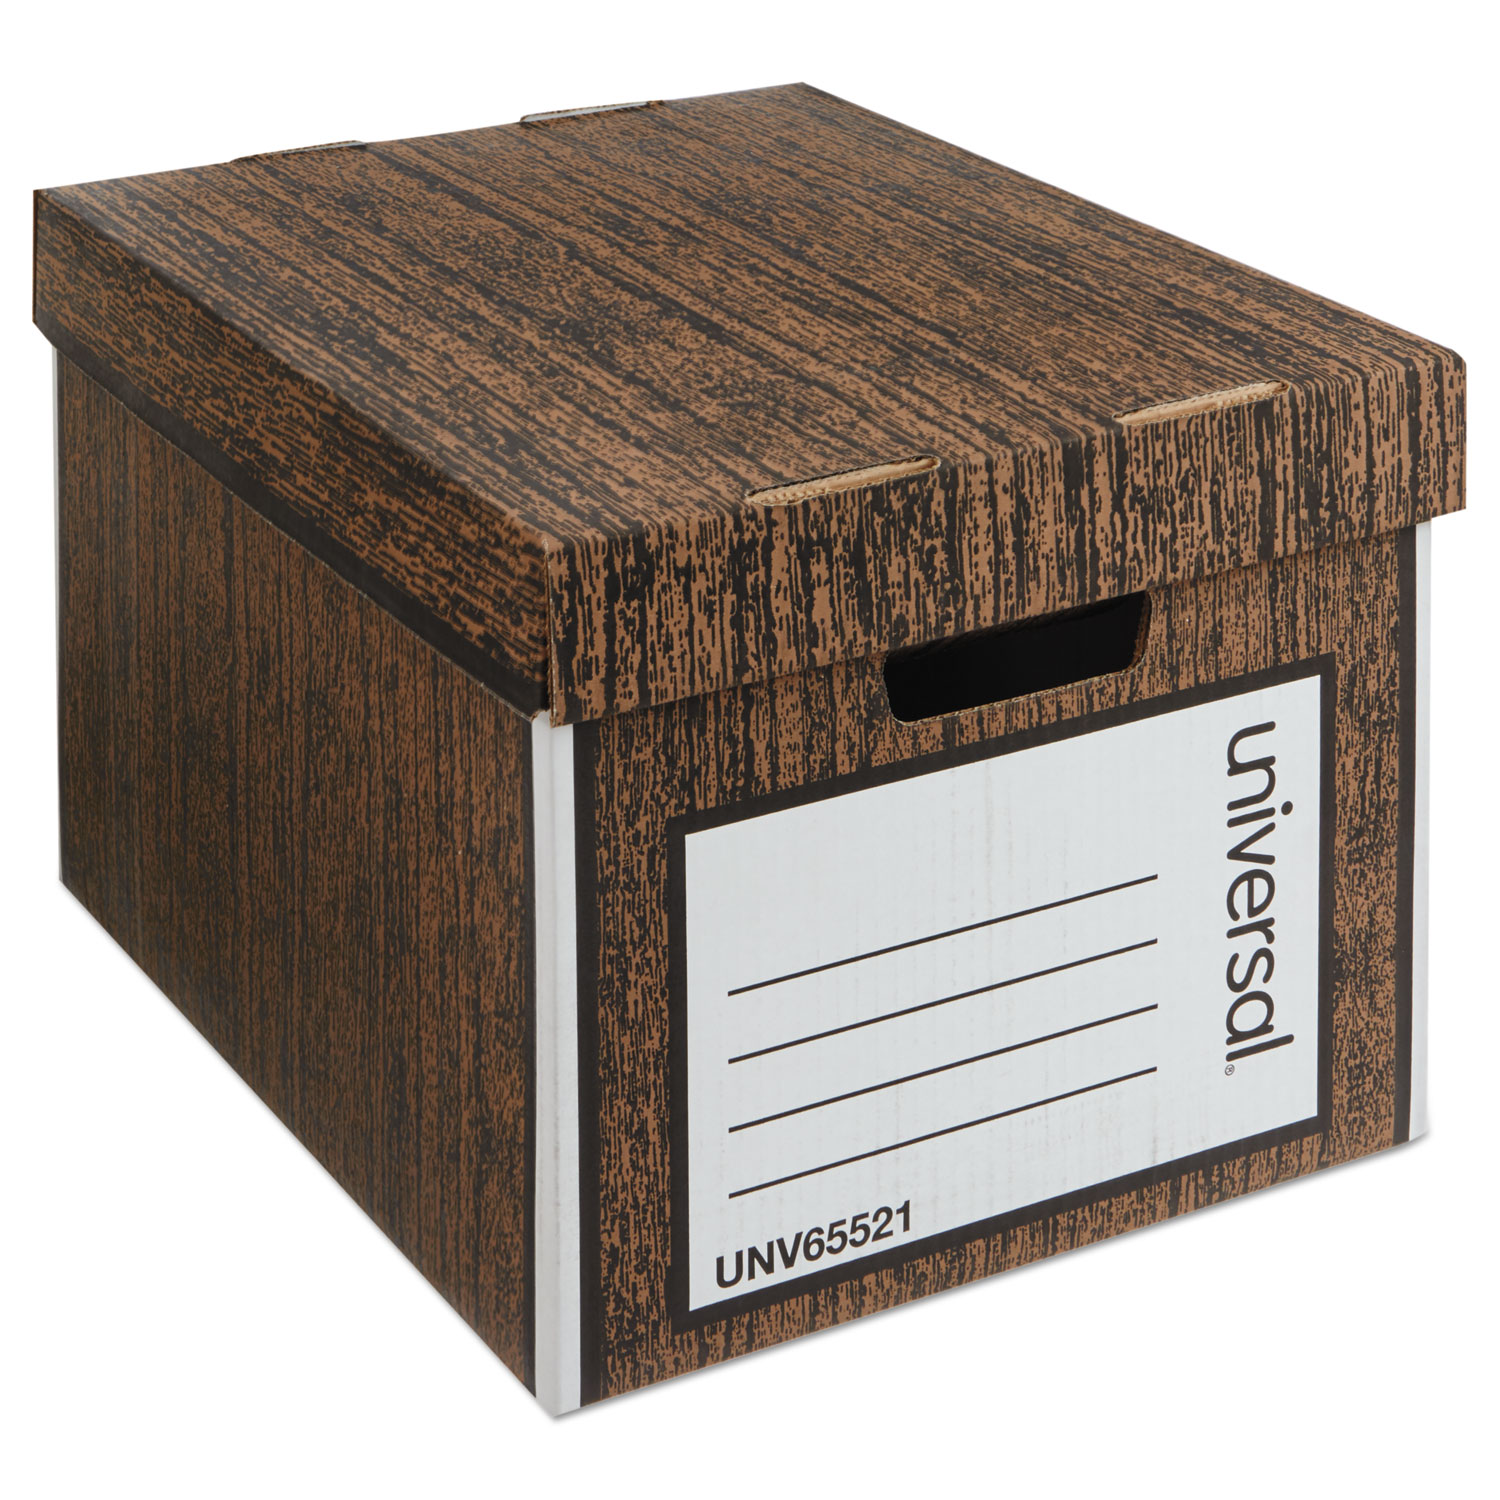  Universal 6552101 Heavy-Duty Easy Assembly Storage Box, Letter/Legal Files, Woodgrain, 12/Carton (UNV65521) 